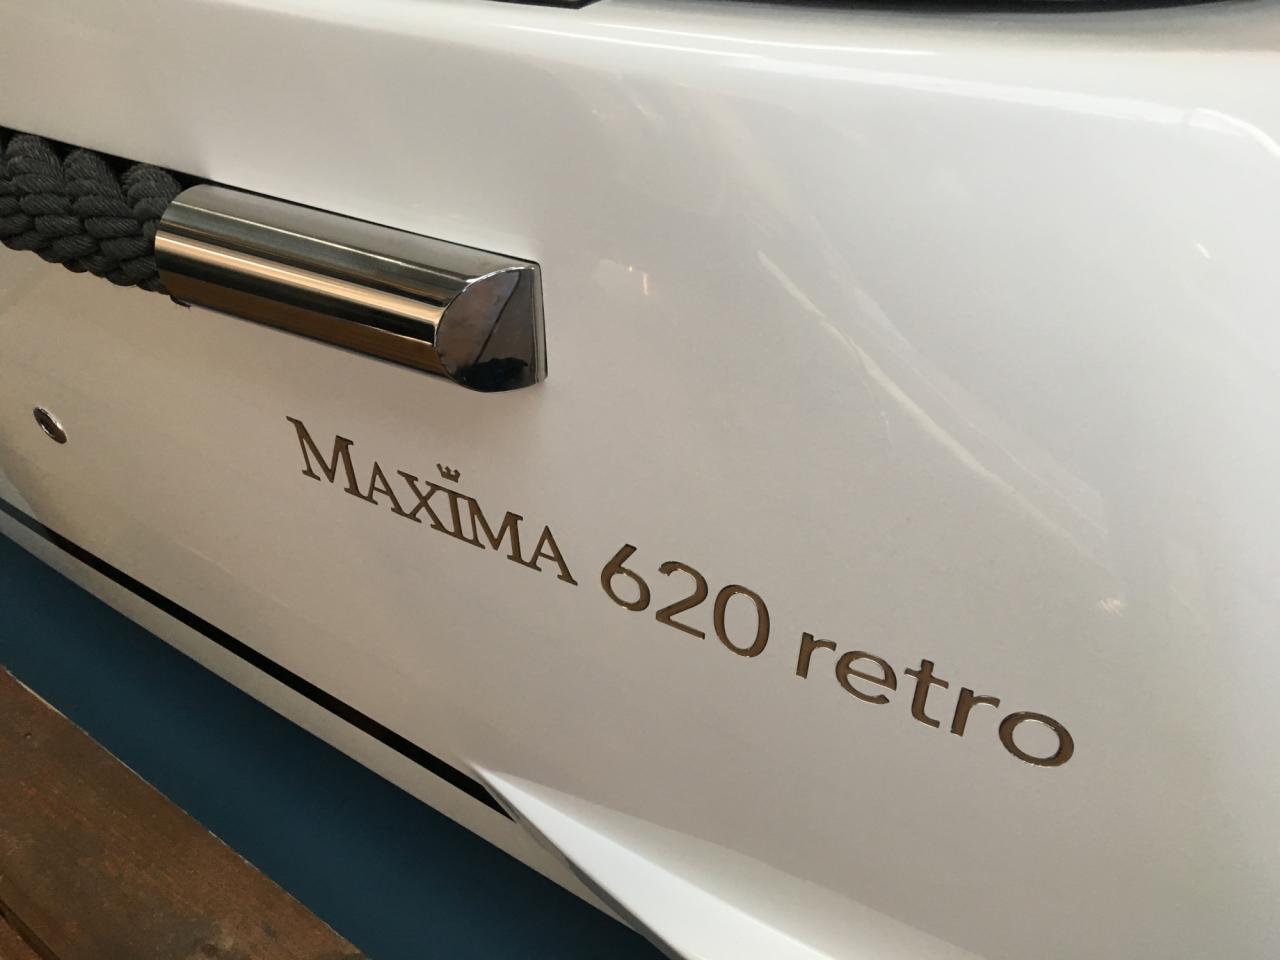 Maxima 620 Retro 44